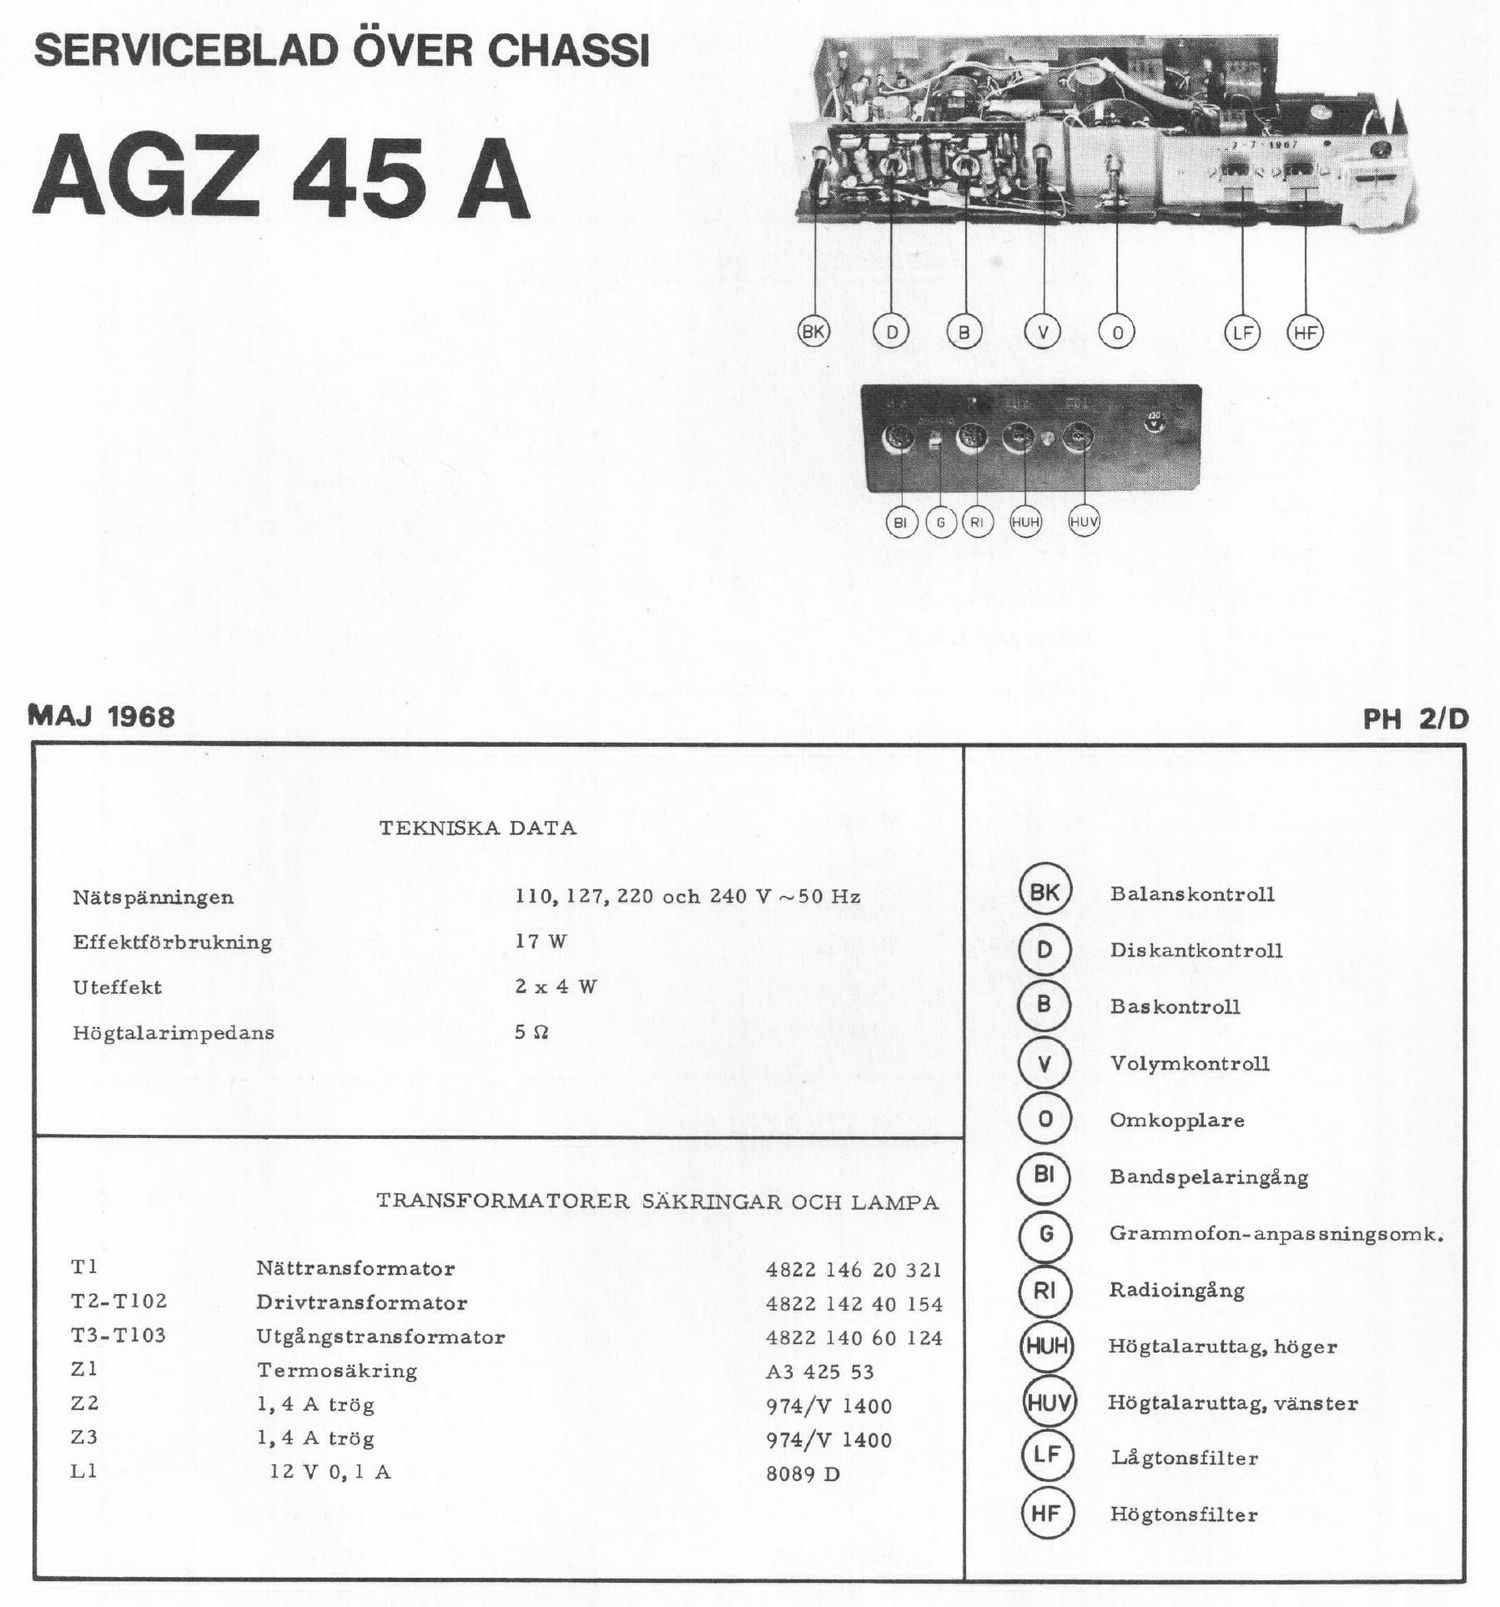 philips agz 45 a service manual swedish